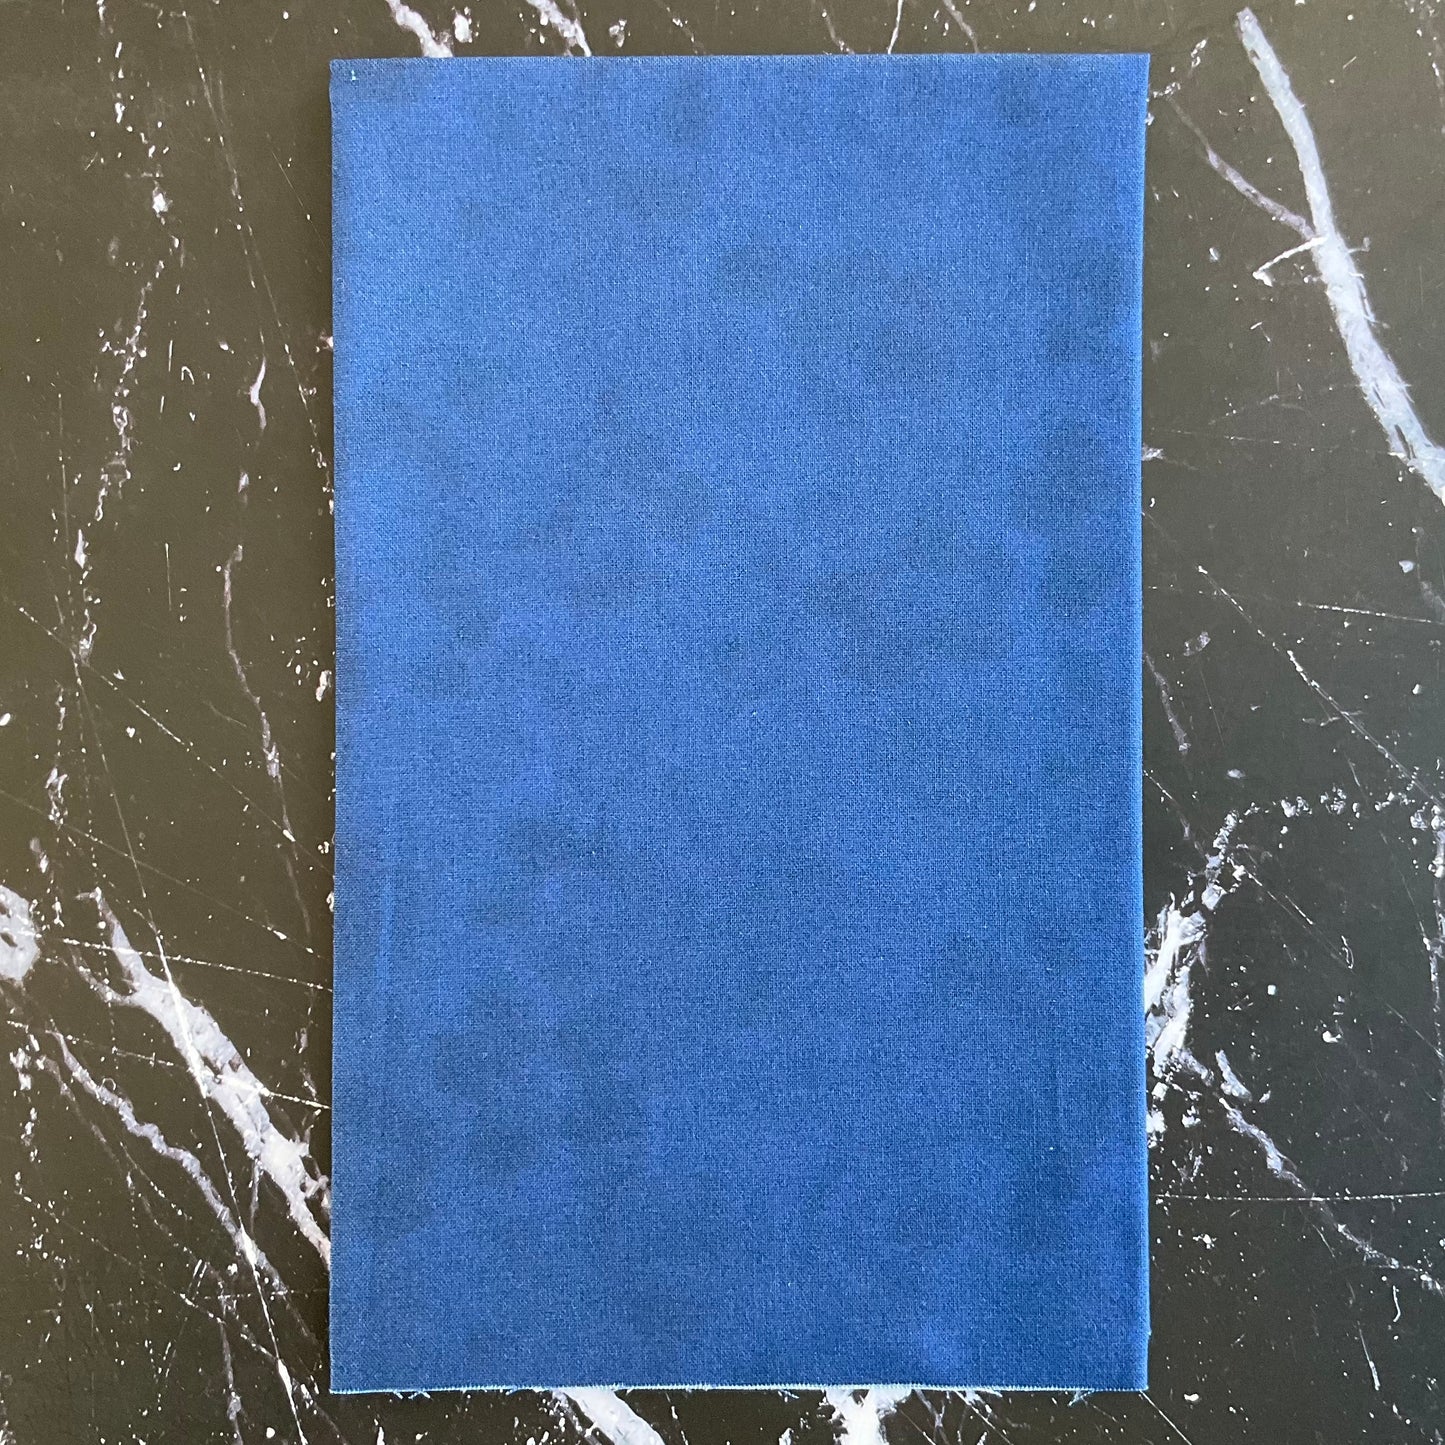 Bluebell par Janet Clare : Bleu de Prusse 16966 12